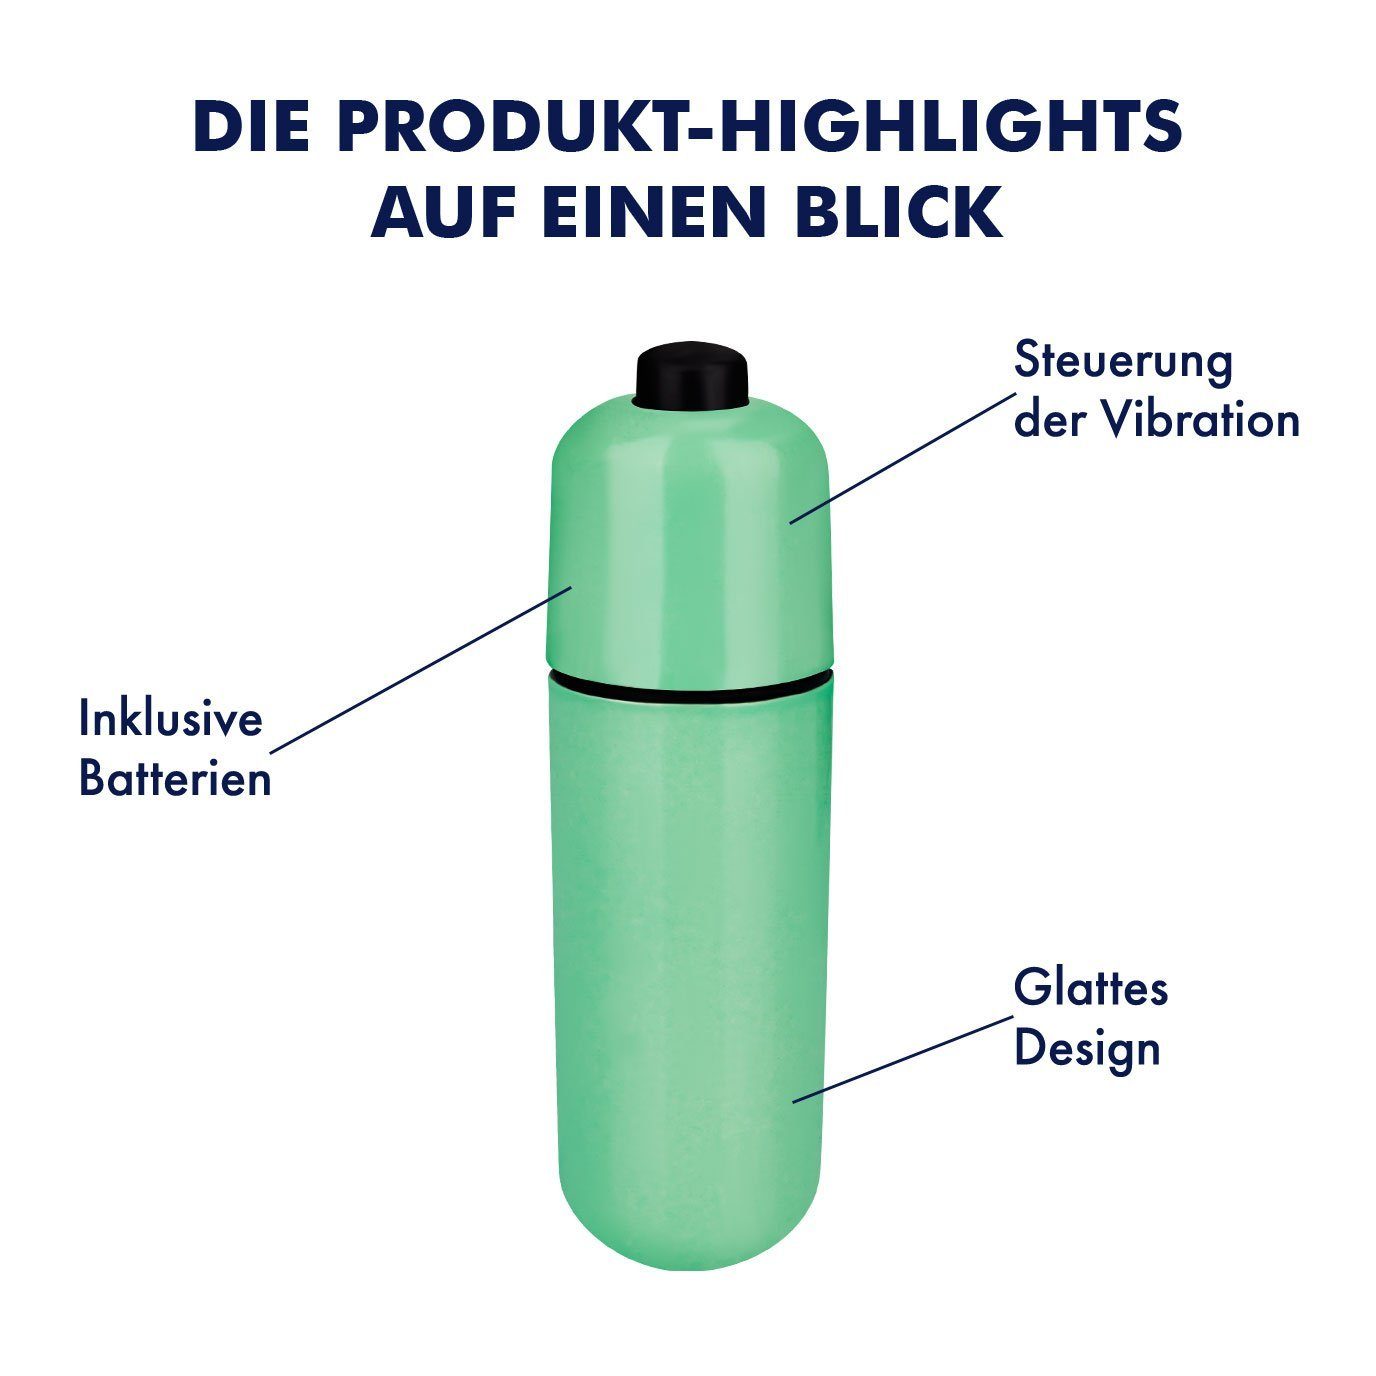 Batterien EIS Mint Bullet', 'Klassisches Auflege-Vibrator Minivibrator 5.9cm, EIS inkl.